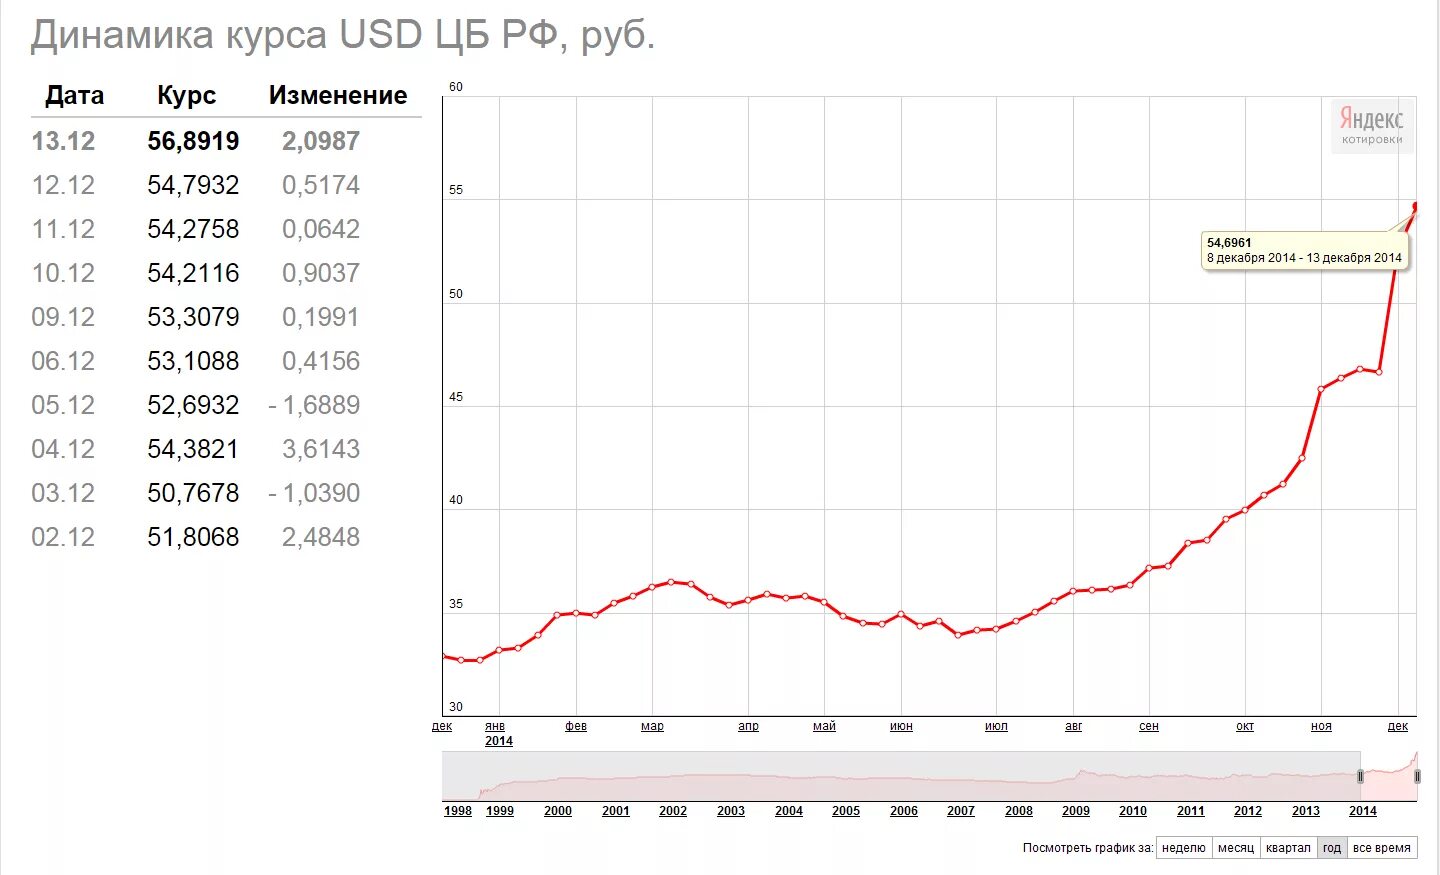 Курс доллара к рублю график за 2014. График рубль доллар 2014 года. Курс рубля к доллару в 2014 году по месяцам таблица. Доллар рубль 2014-2015 график.